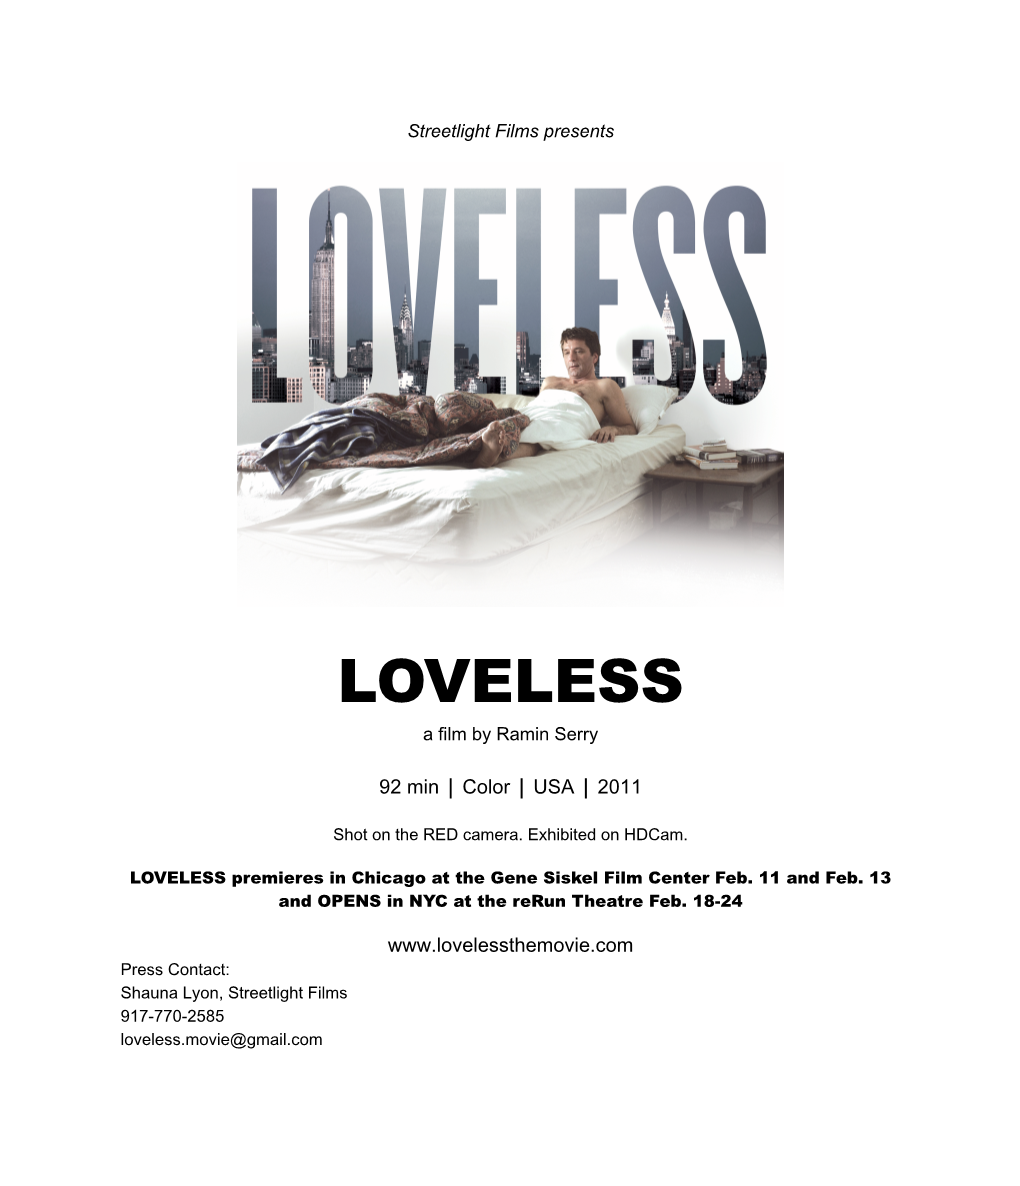 LOVELESS a Film by Ramin Serry